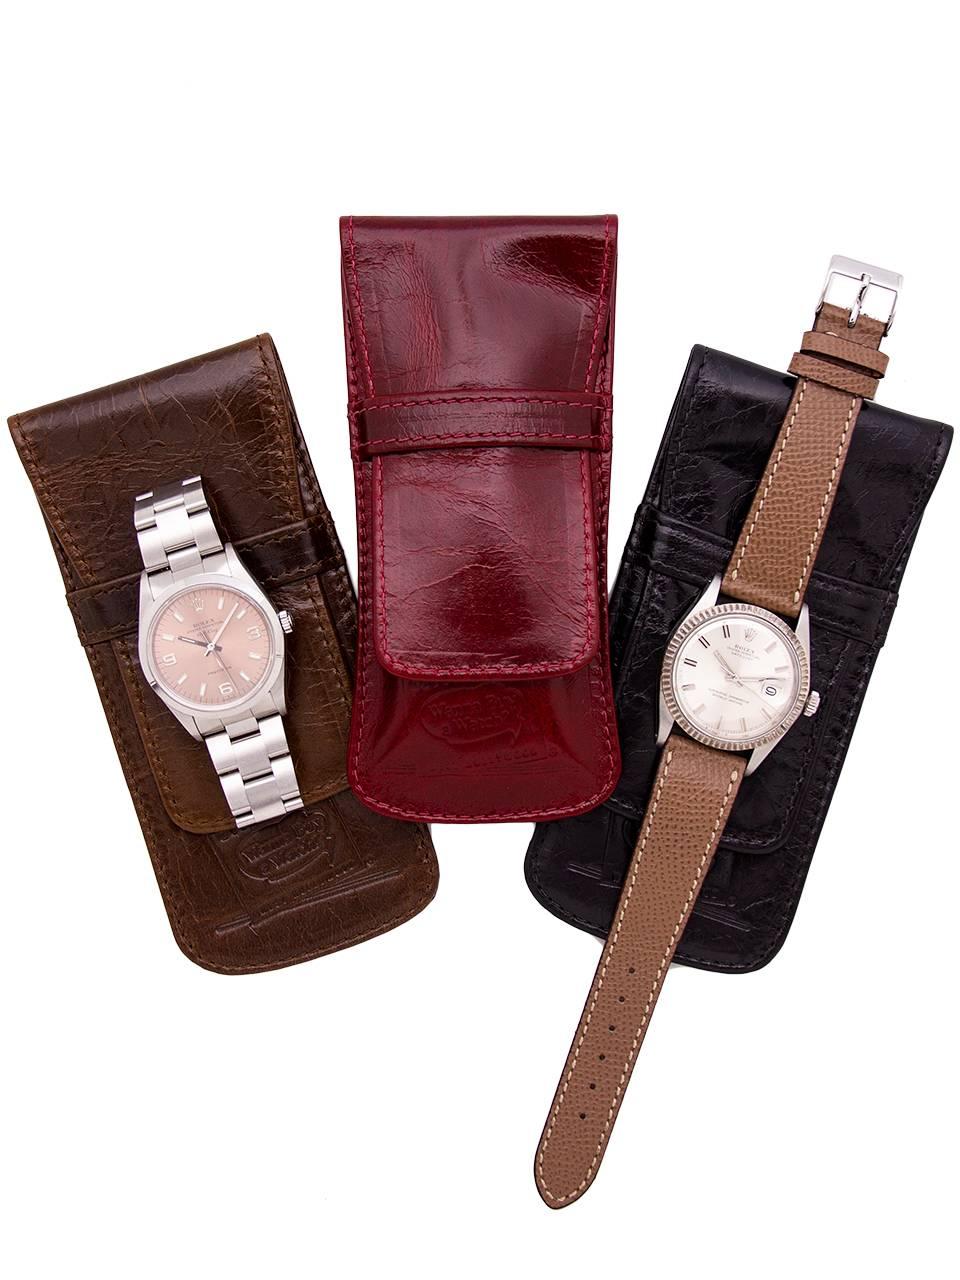 Rolex Stainless Steel Datejust Self Winding Wristwatch Ref 116200, circa 2007 1